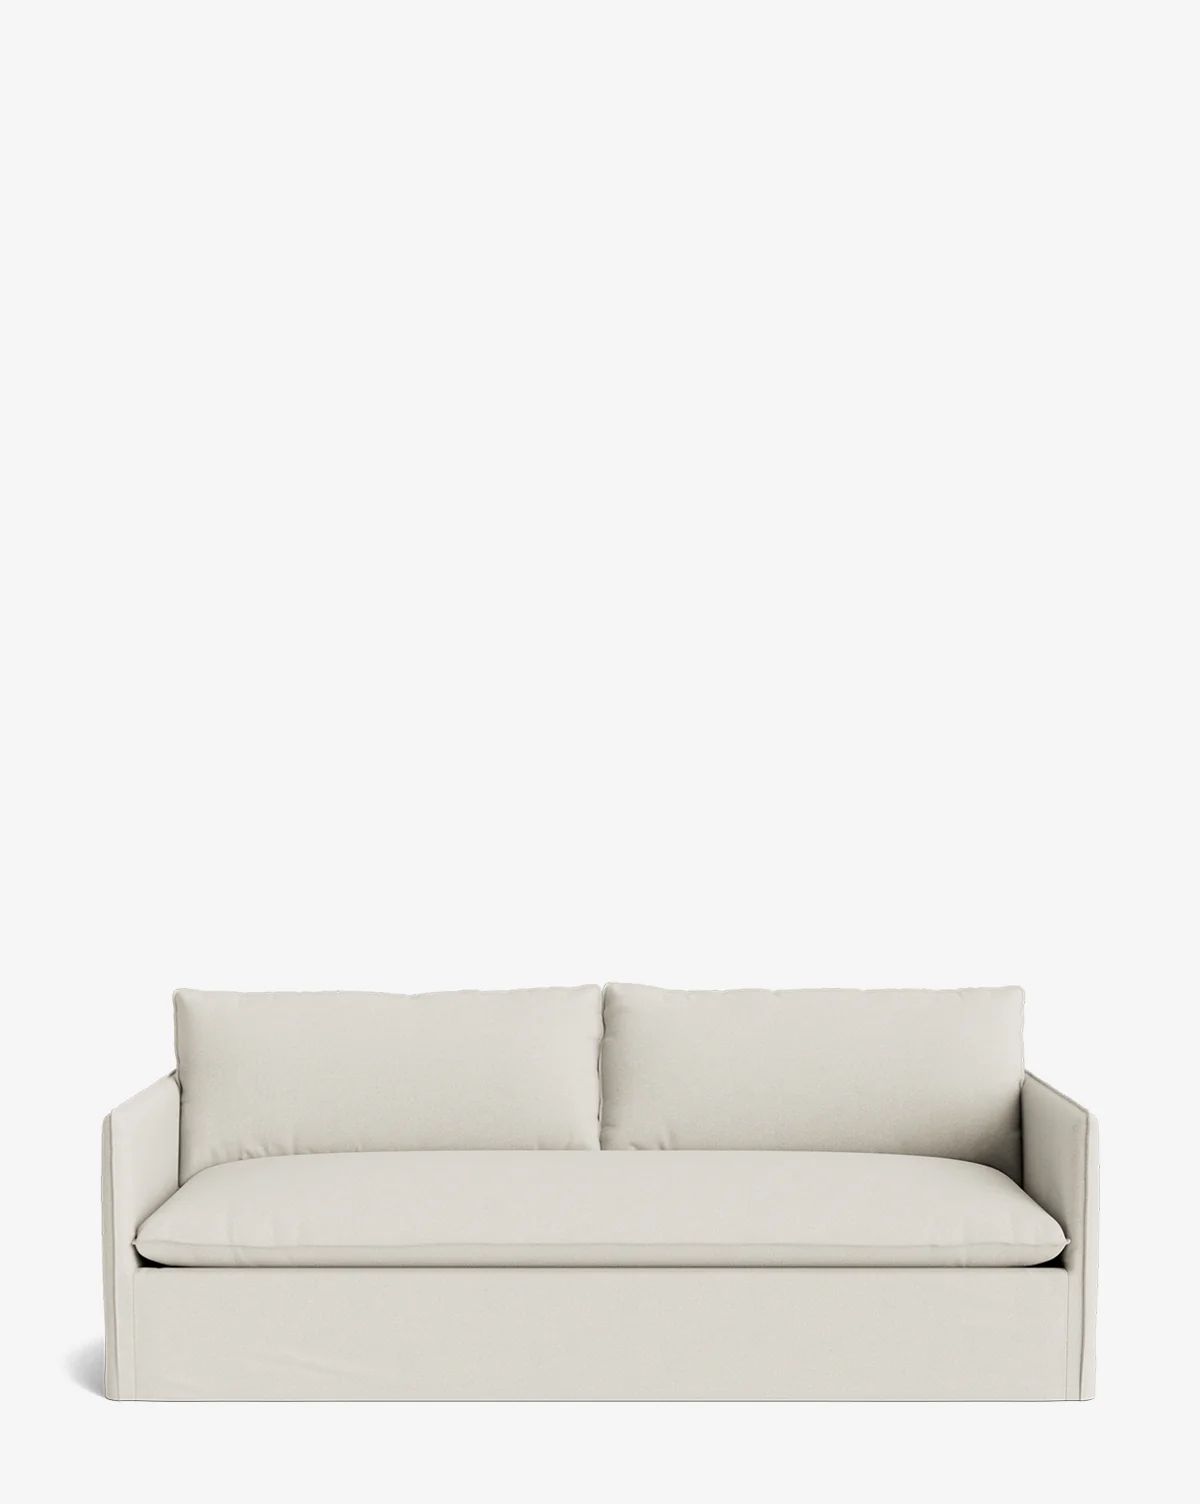 Everleigh Sofa | McGee & Co.